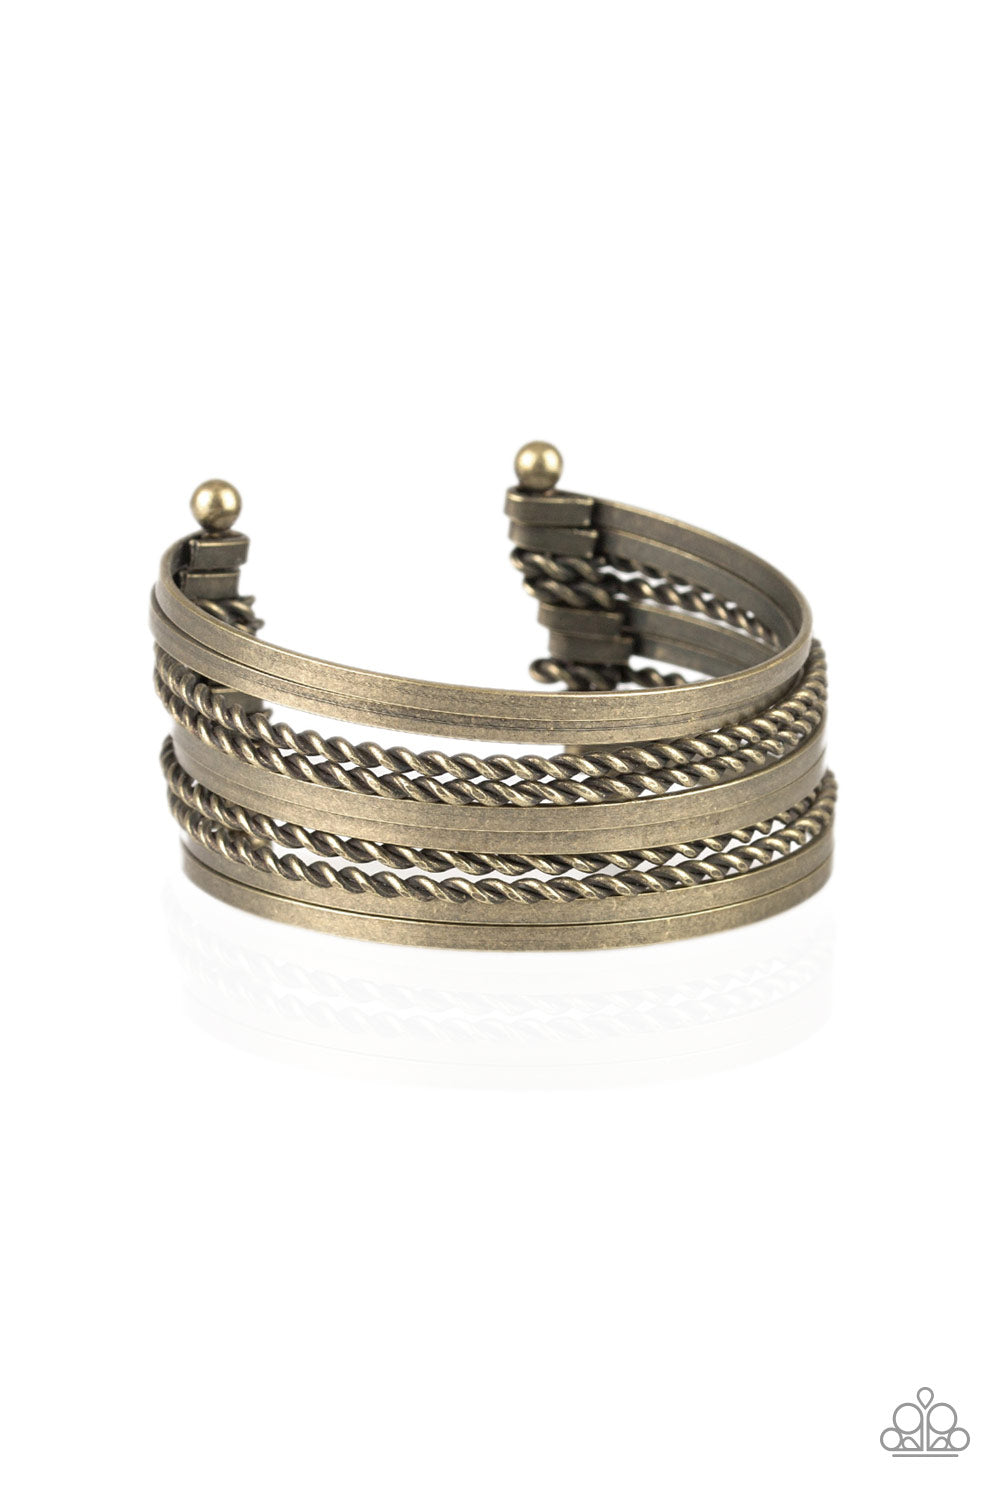 Paparazzi Perfectly Patterned - Brass - Stacked Brass Rods - Cuff Bracelet - $5 Jewelry with Ashley Swint